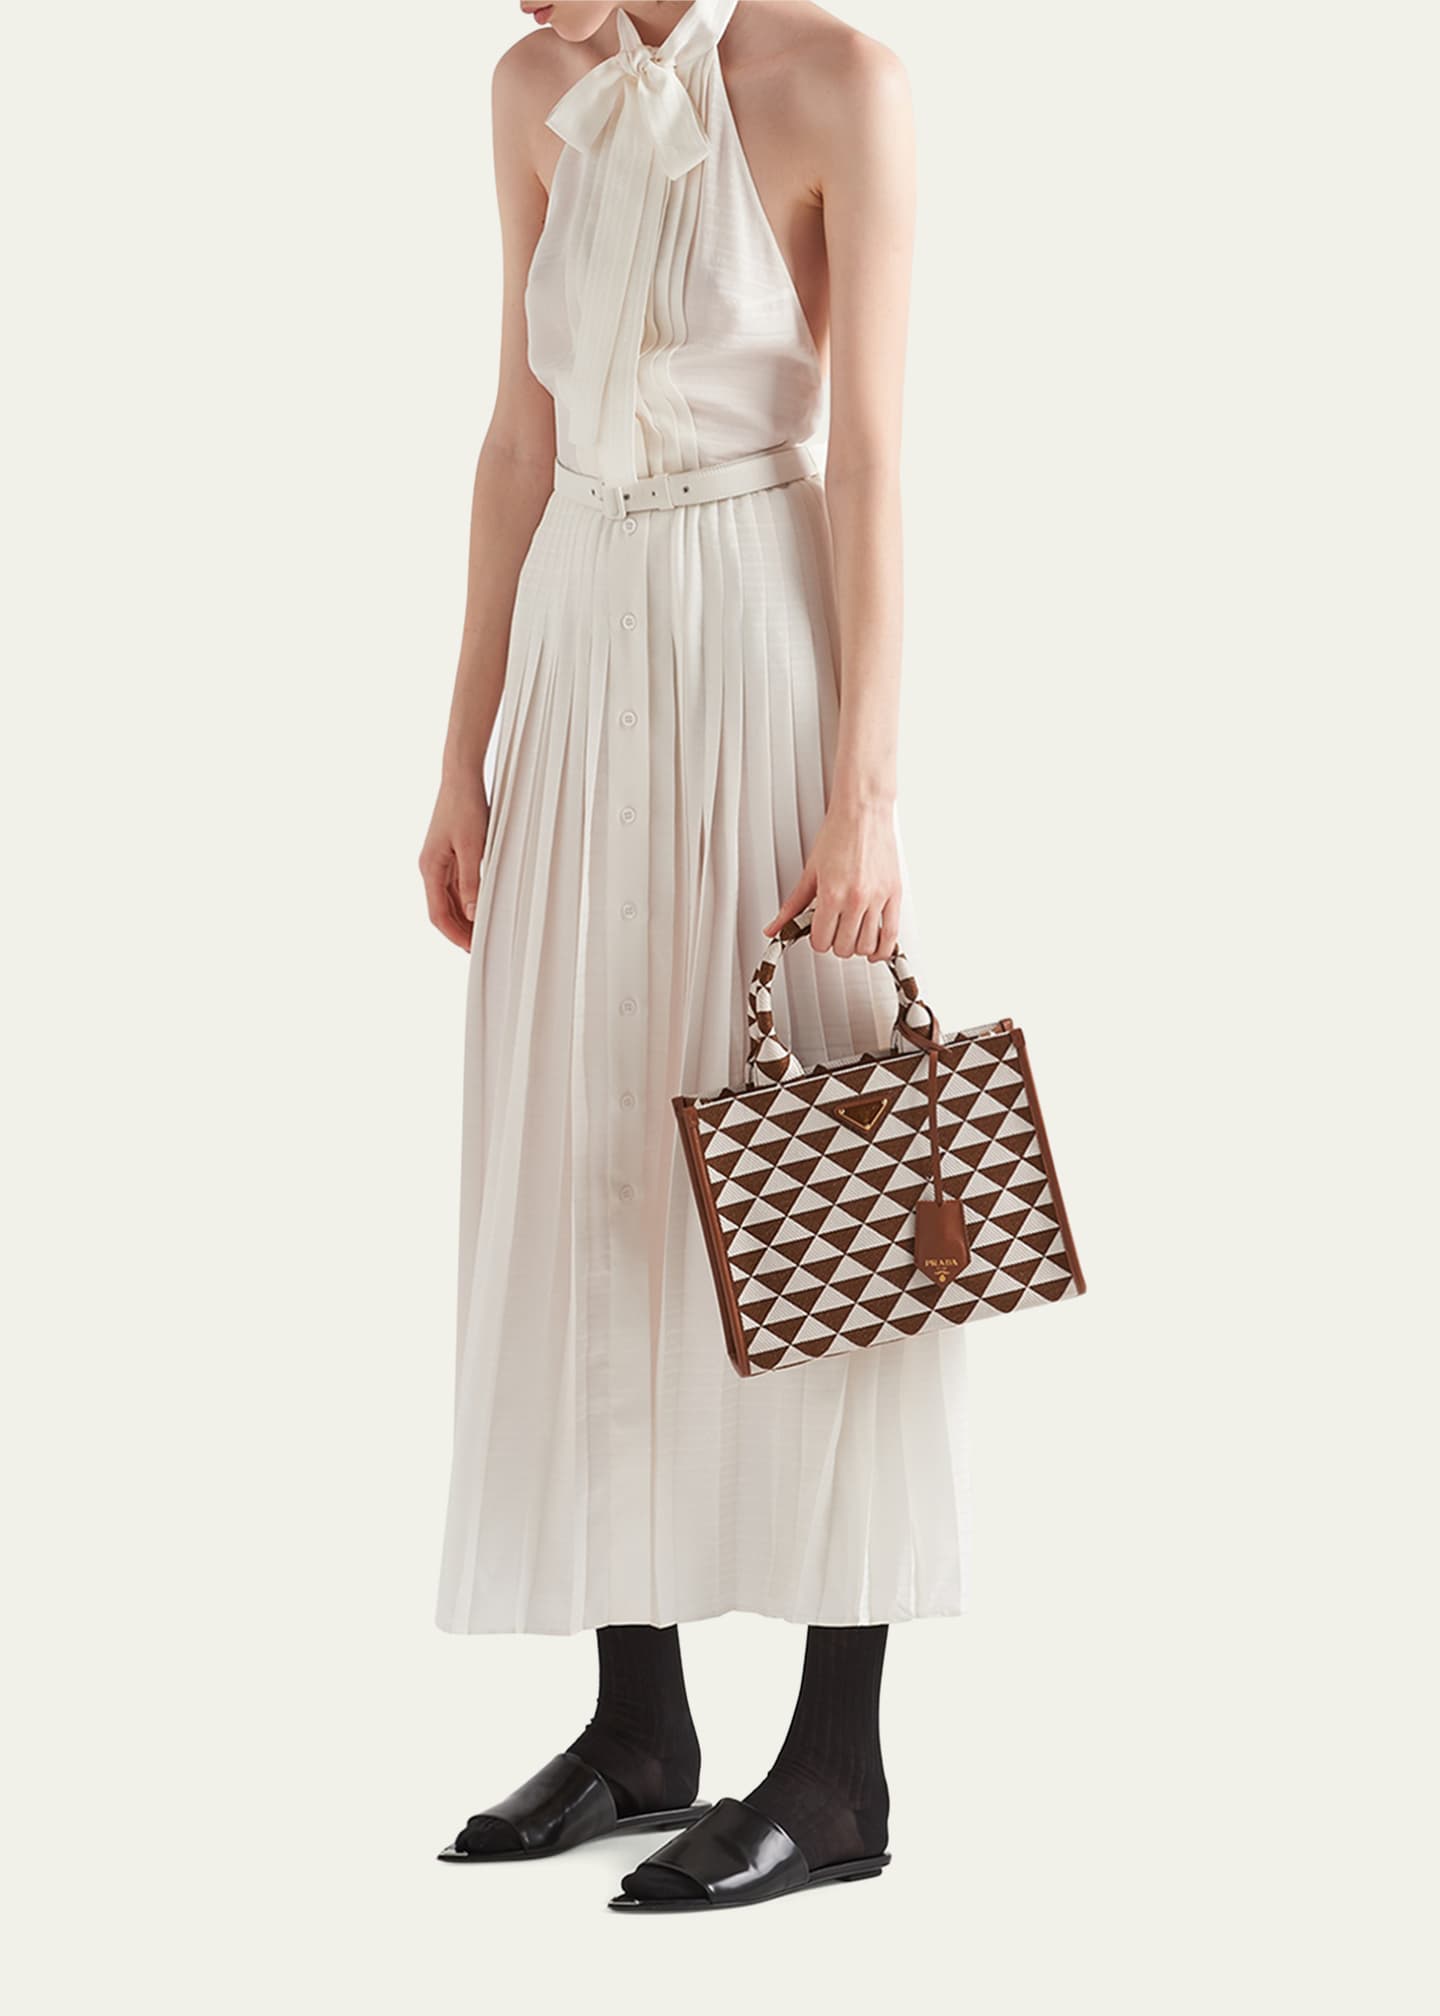 Louis Vuitton Monogram Jacquard Sleeveless Denim Jacket White. Size 36